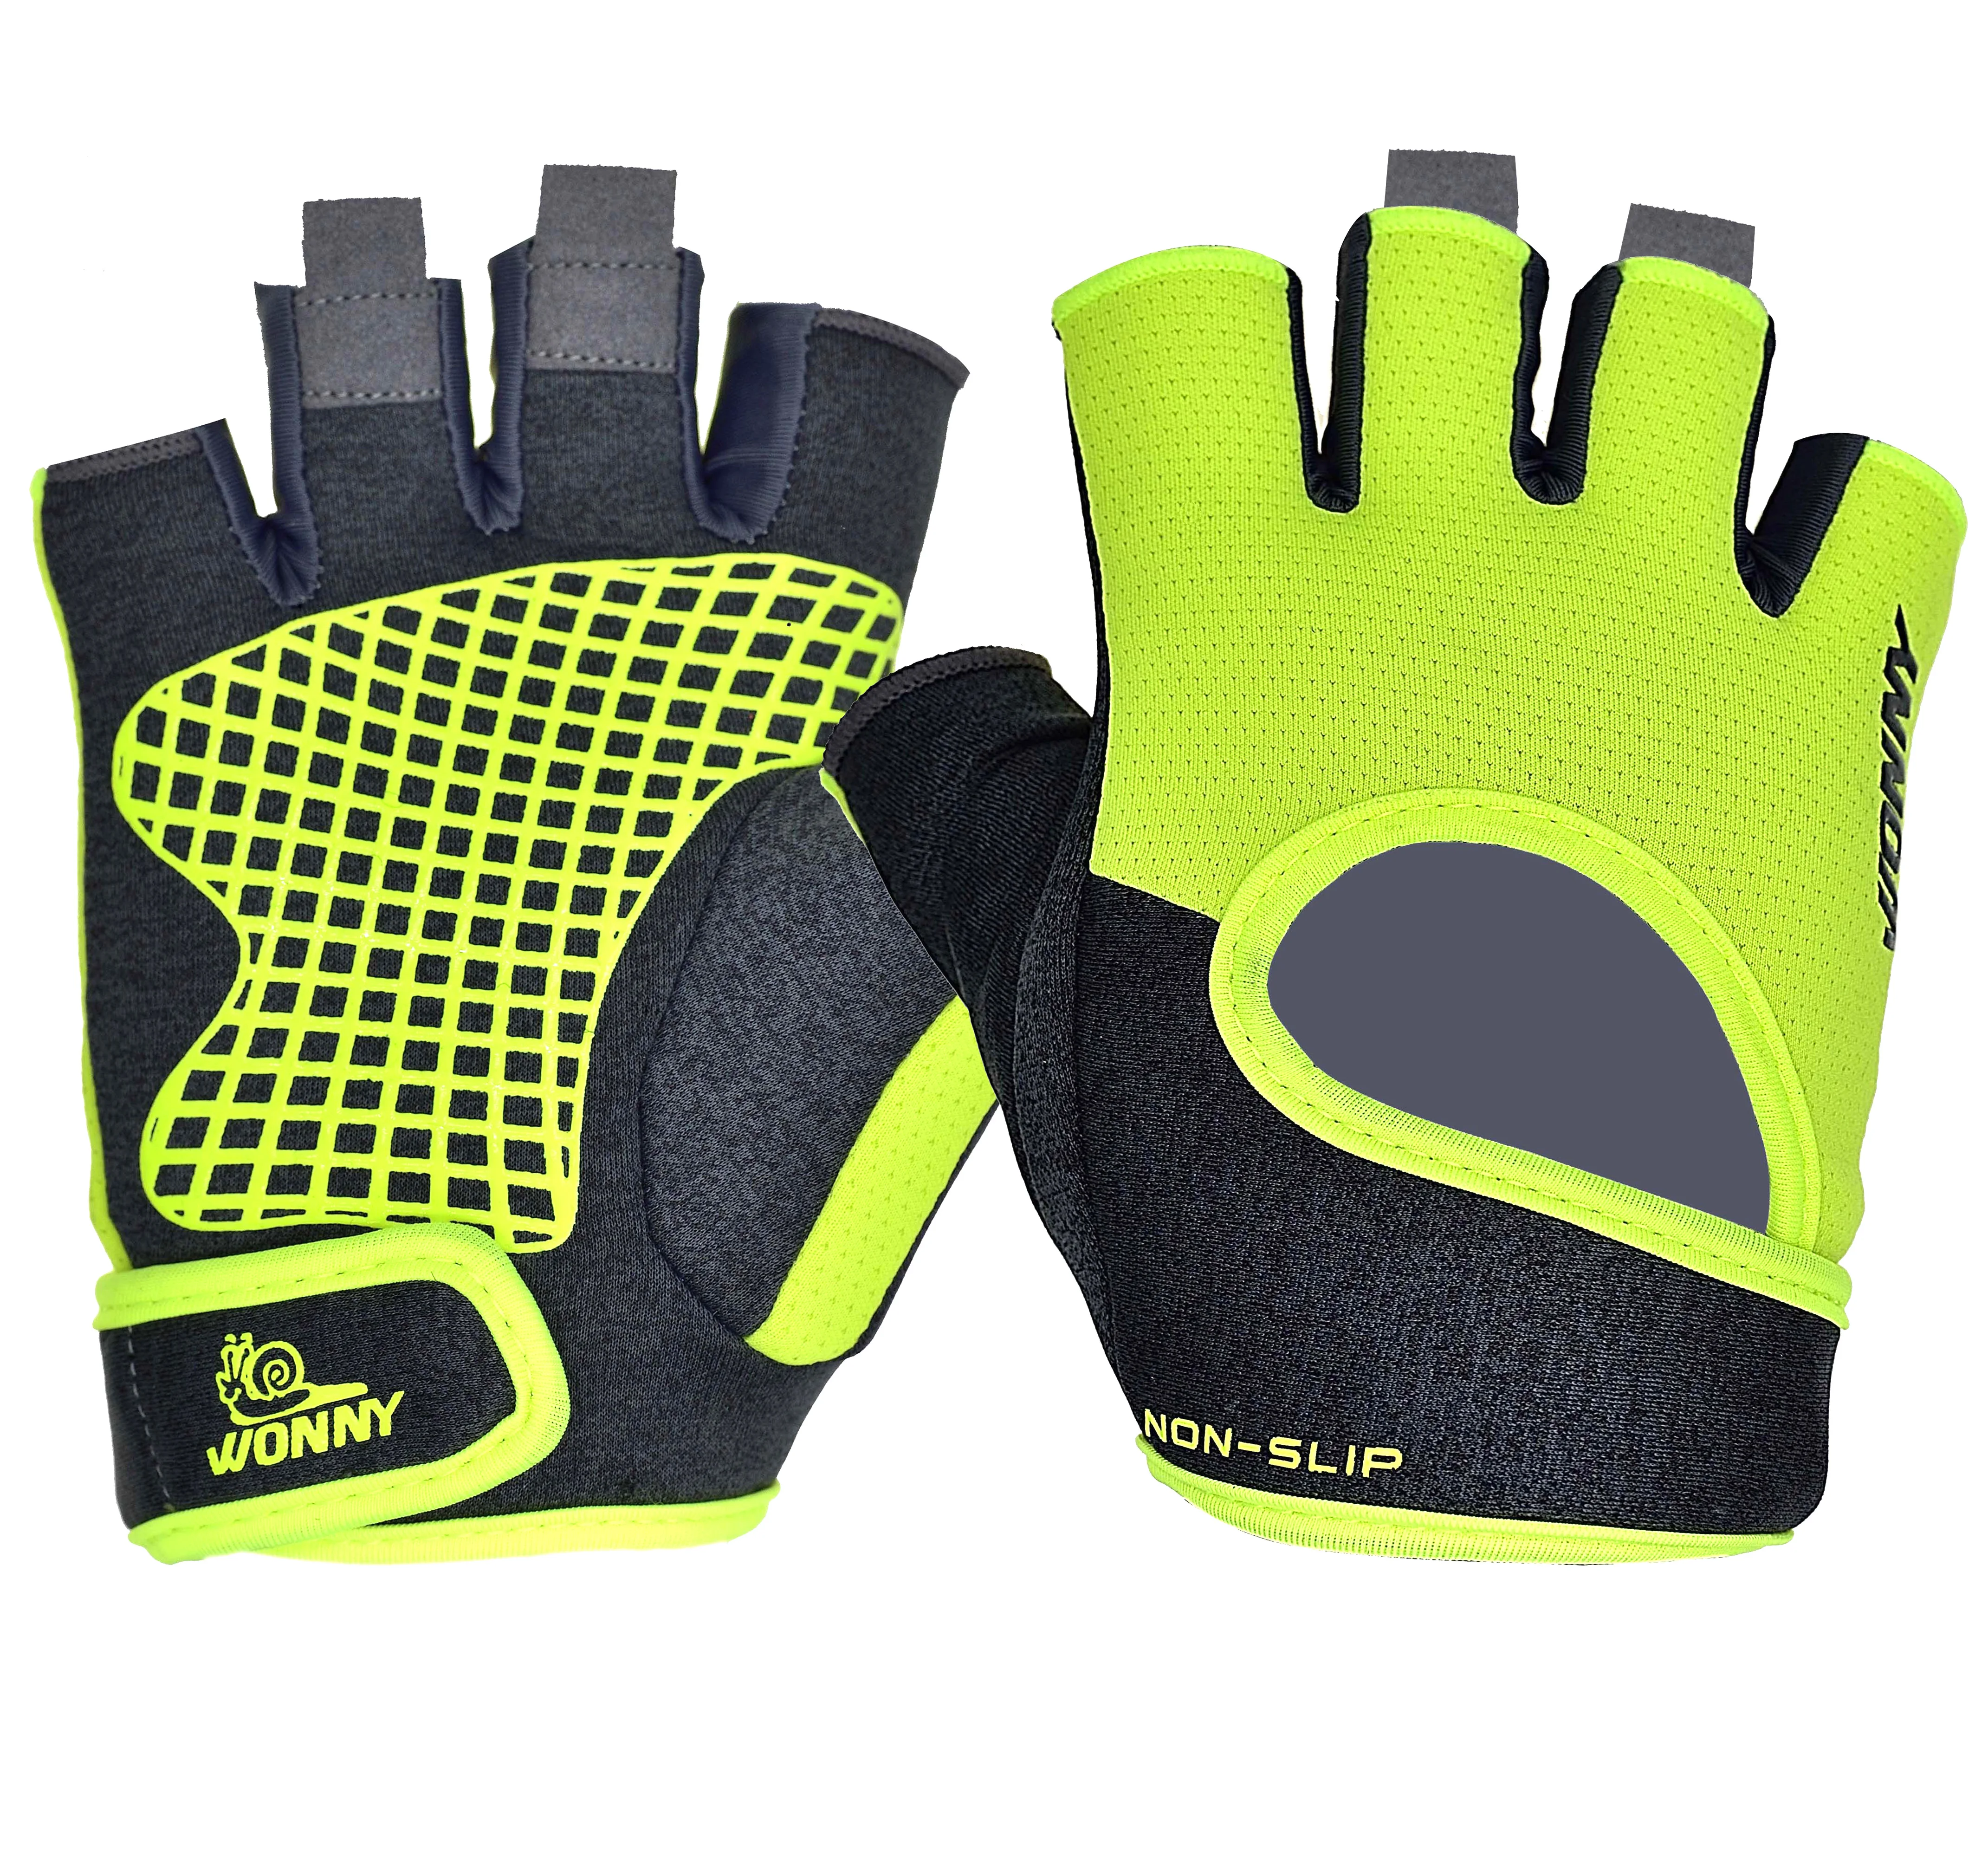 

Wholesale gym fitness fingerless Wrist Support mittens weight lifting neoprene wrist wraps gloves, Black, grey